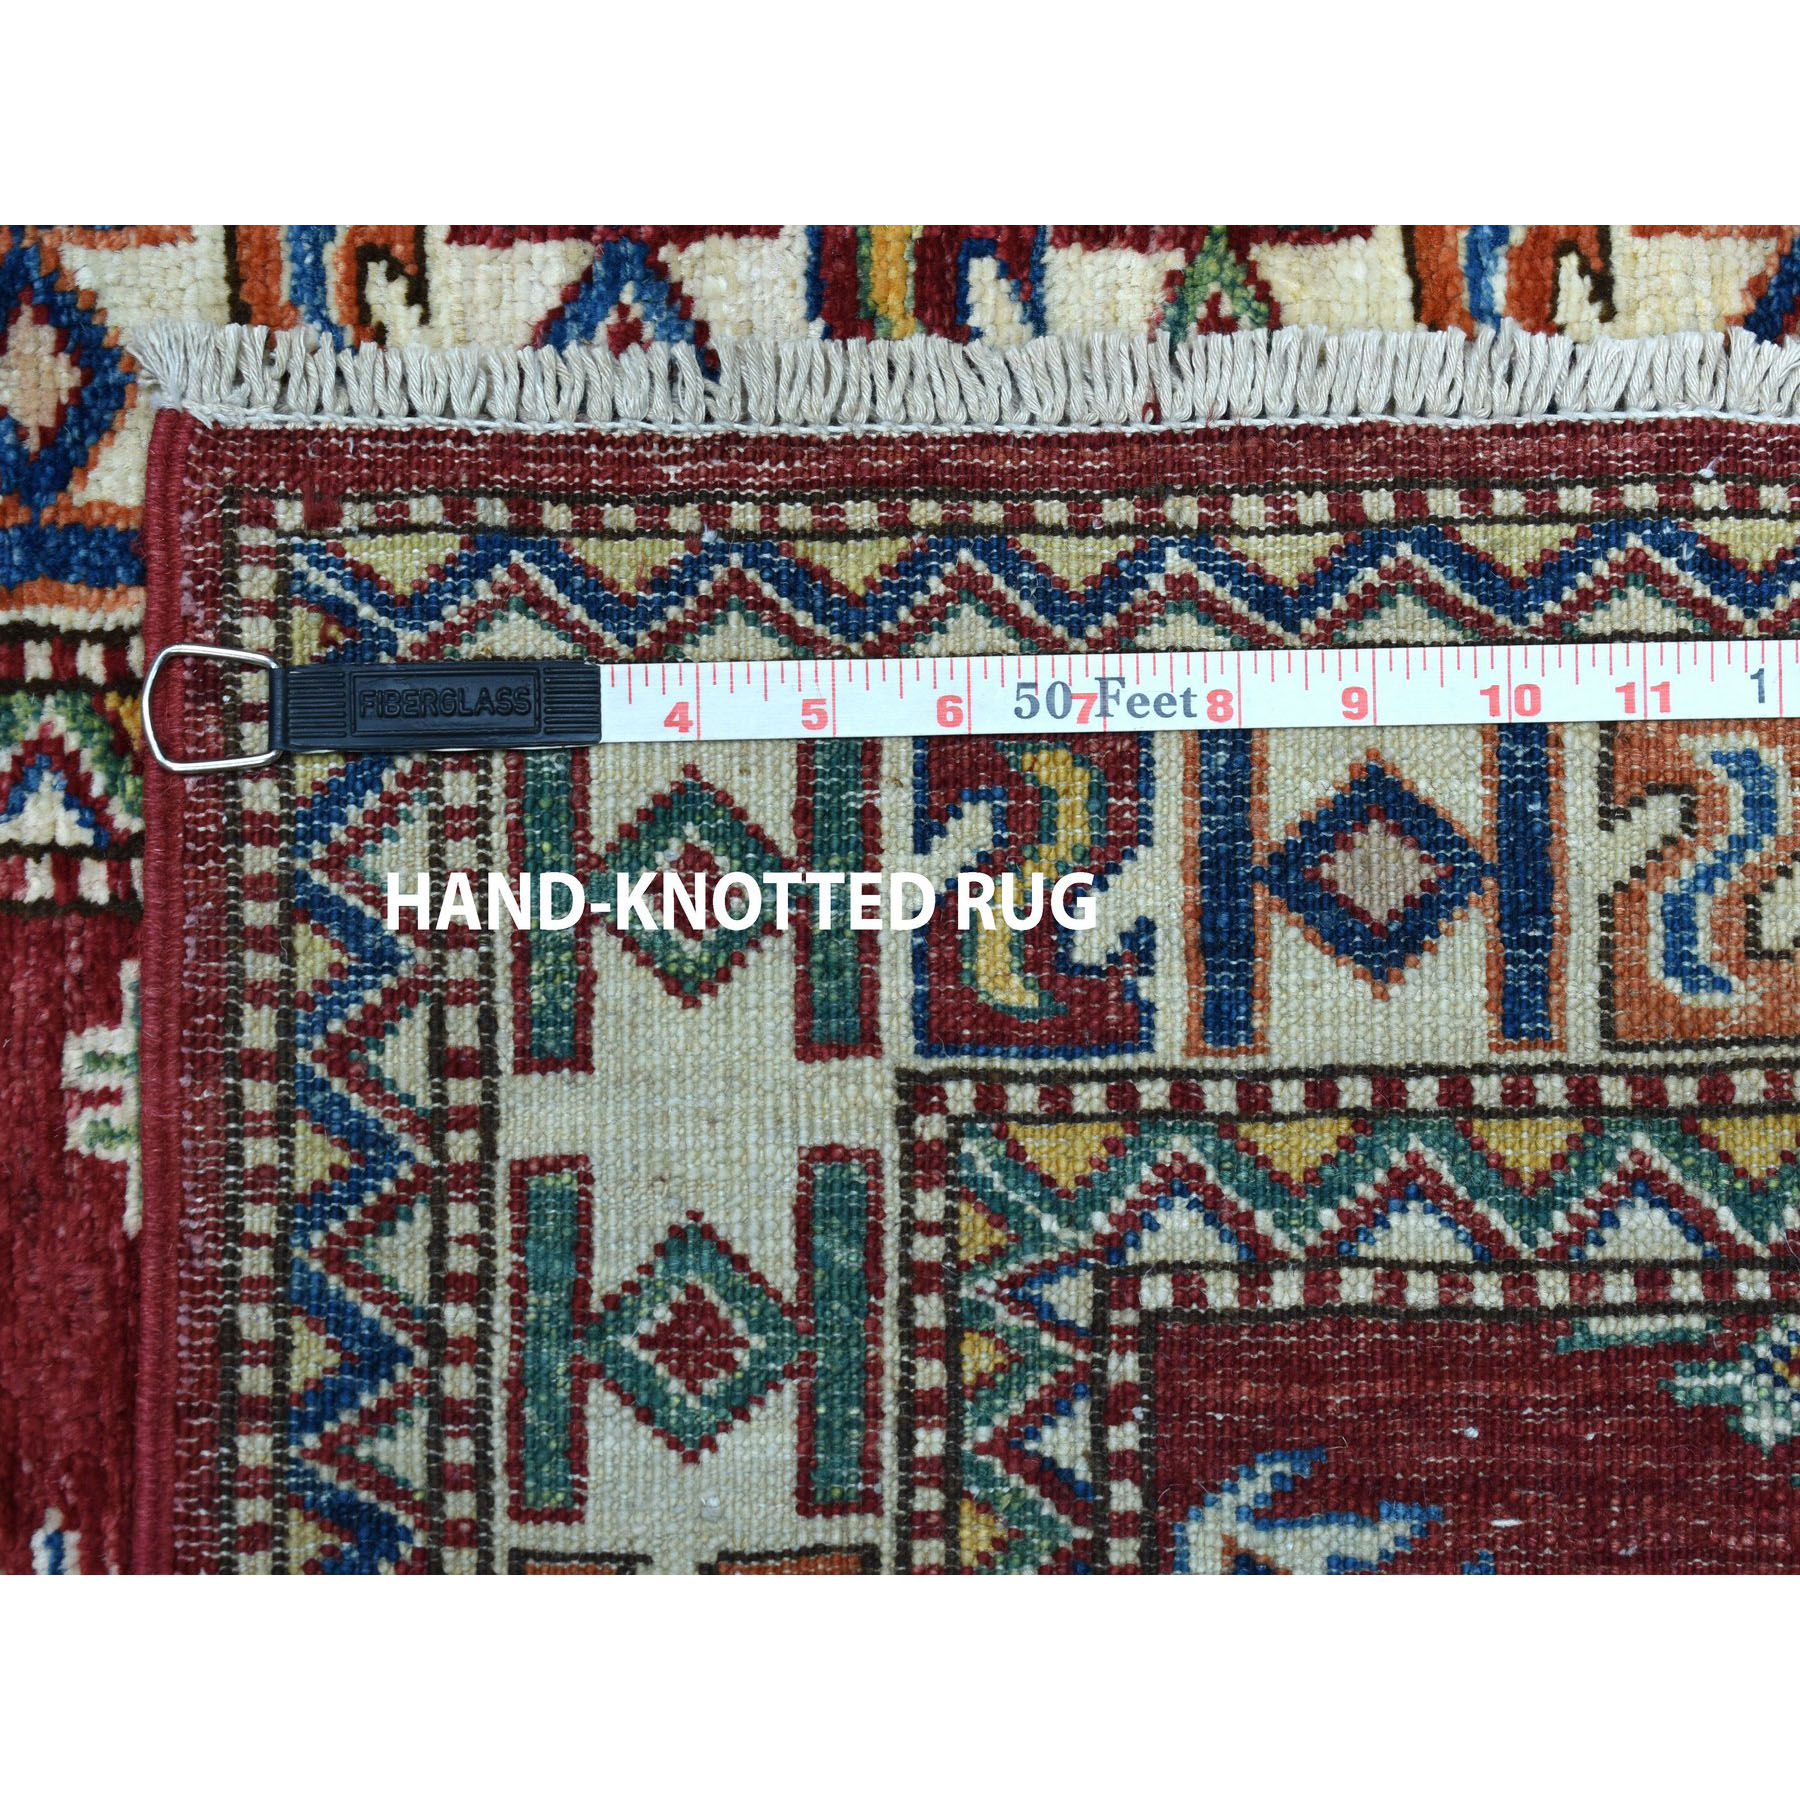 2-8 x19-8  Super Kazak Pure Wool Geometric Design XL Runner Hand-Knotted Oriental Rug 